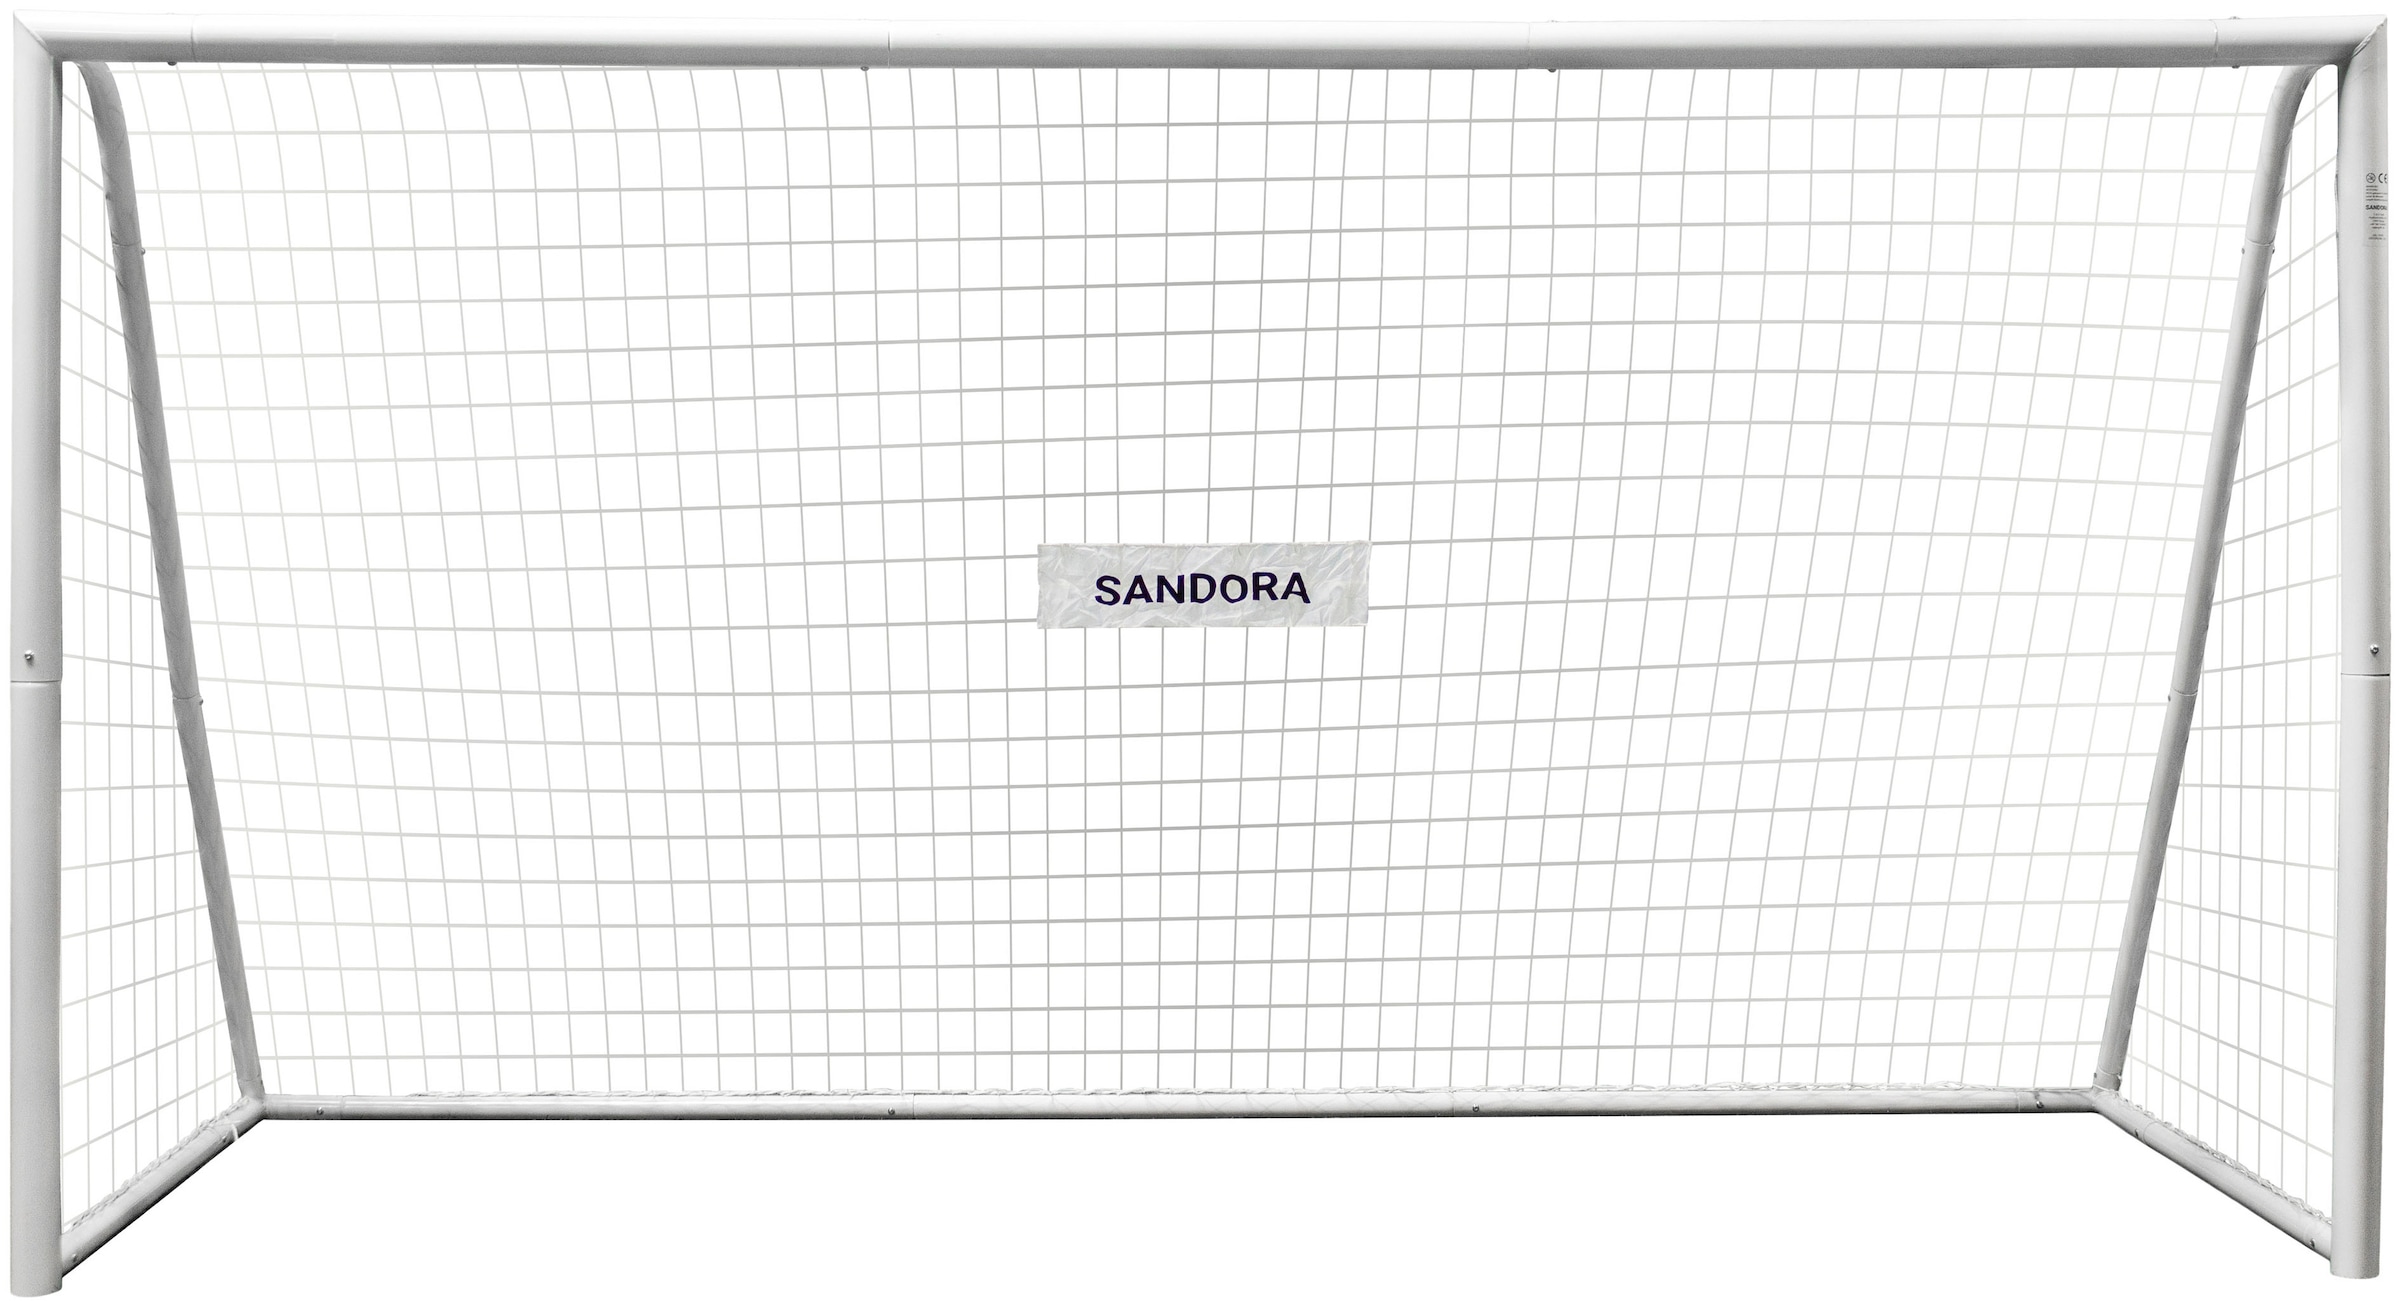 SANDORA Fußballtor »Sandora XXL«, B/H/L: 366x198x152 cm